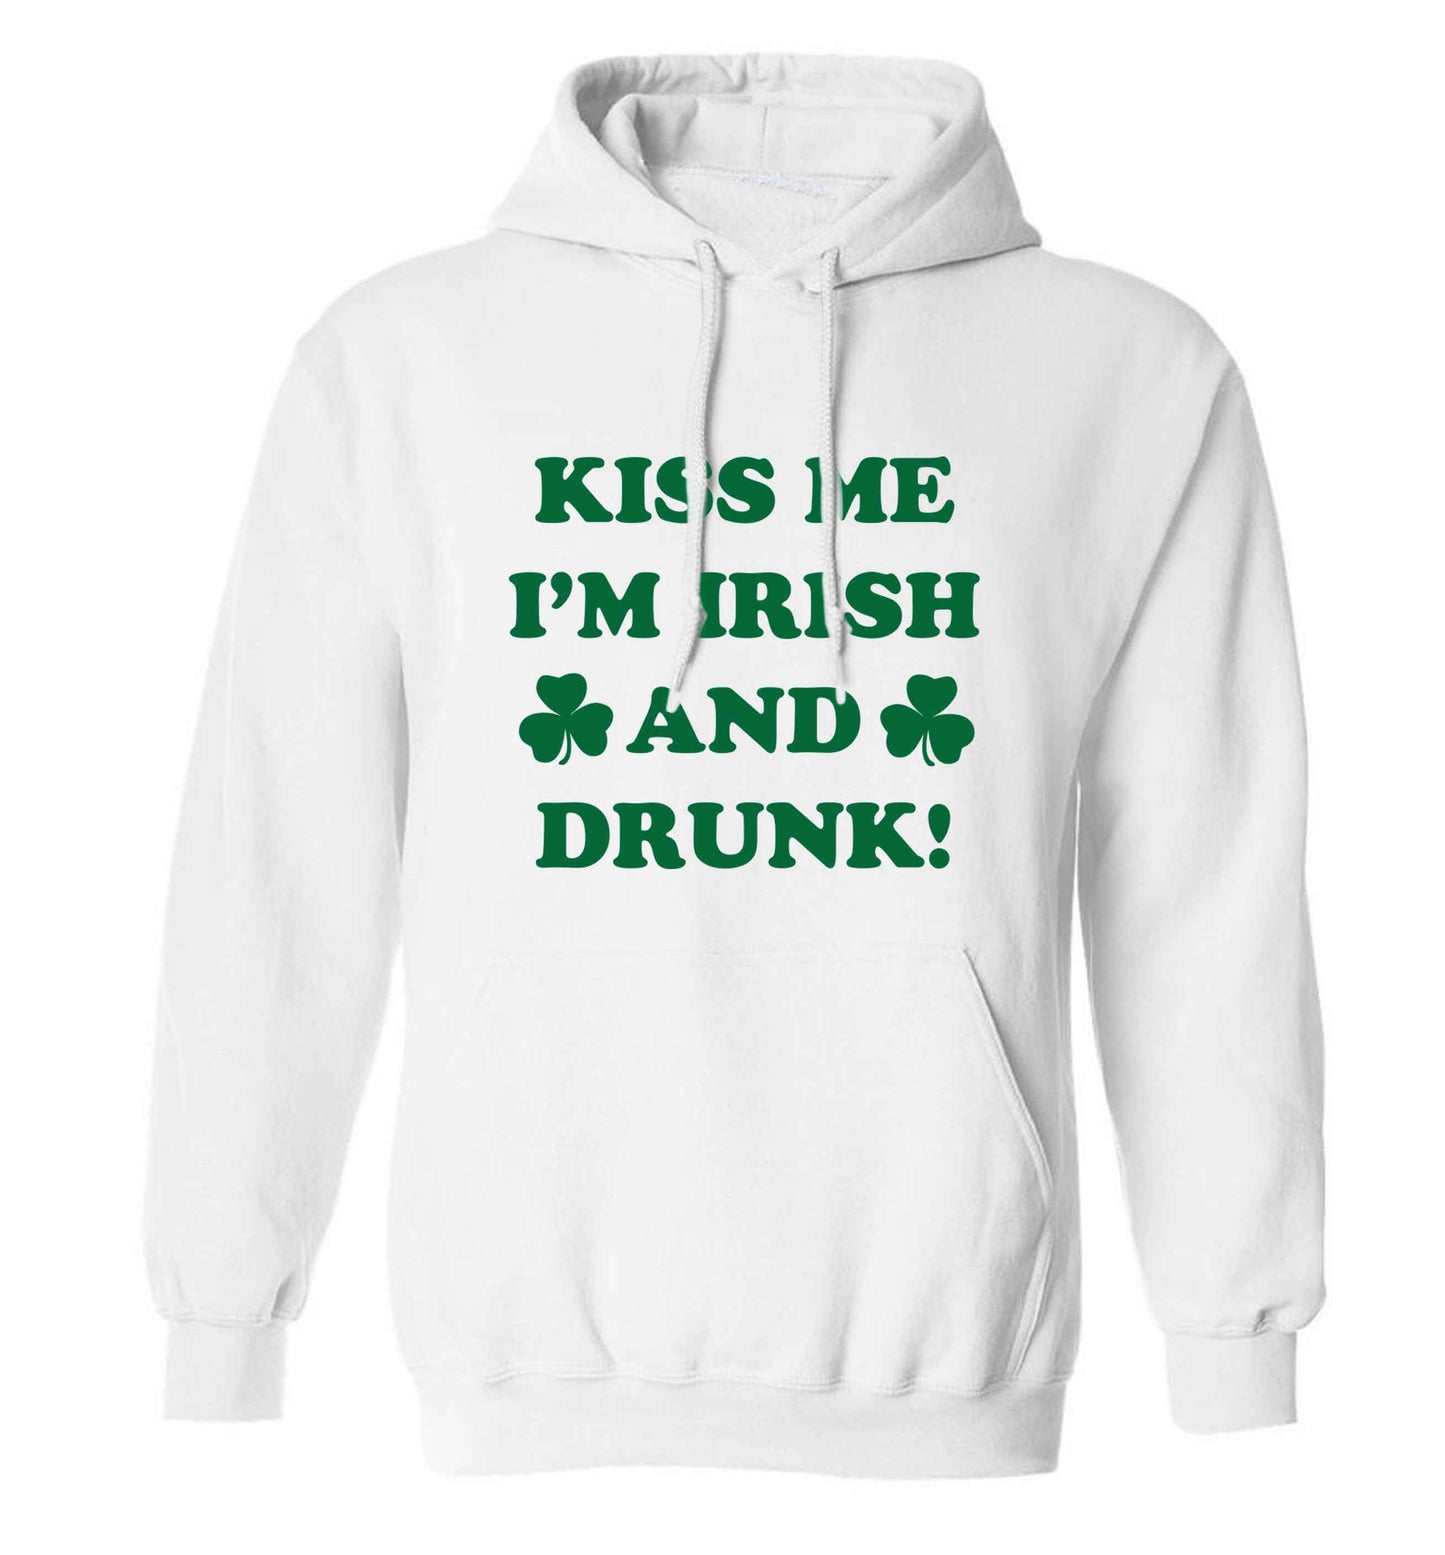 Kiss me I'm Irish and drunk adults unisex white hoodie 2XL